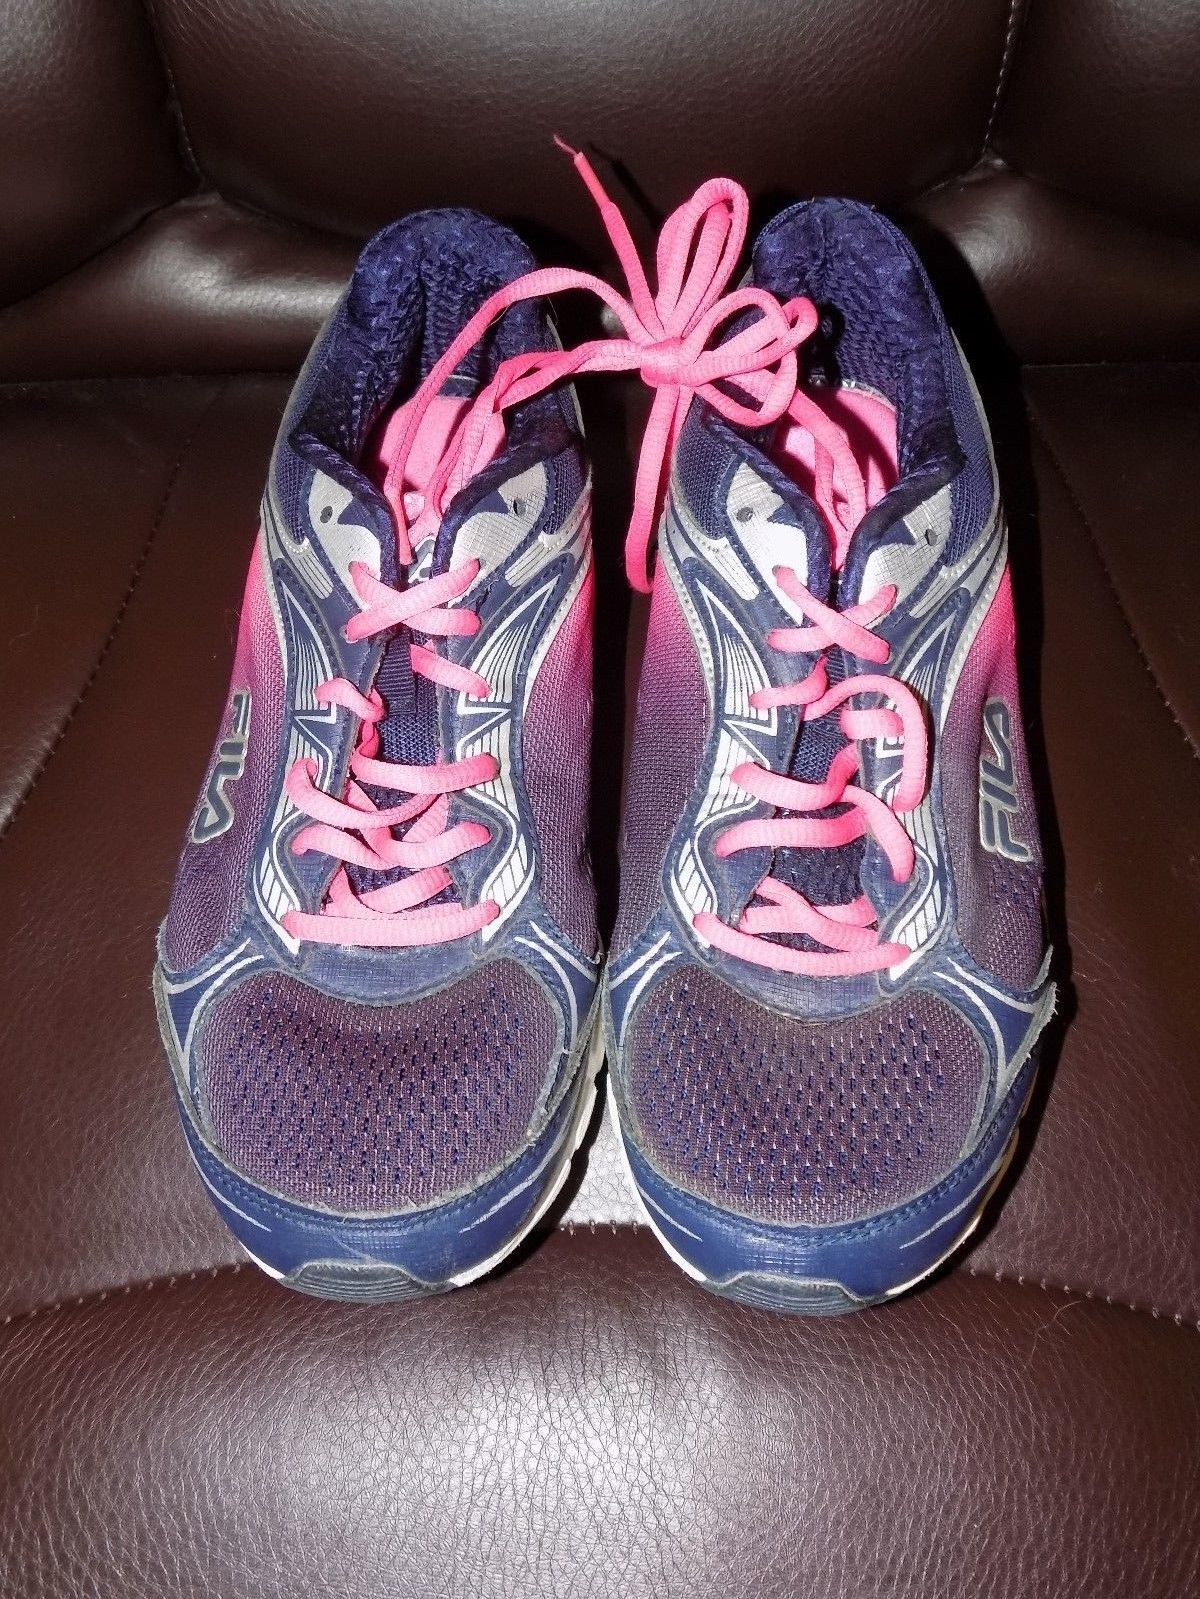 fila multi-color running shoes size 9.5 women's 5sr20541-428 euc